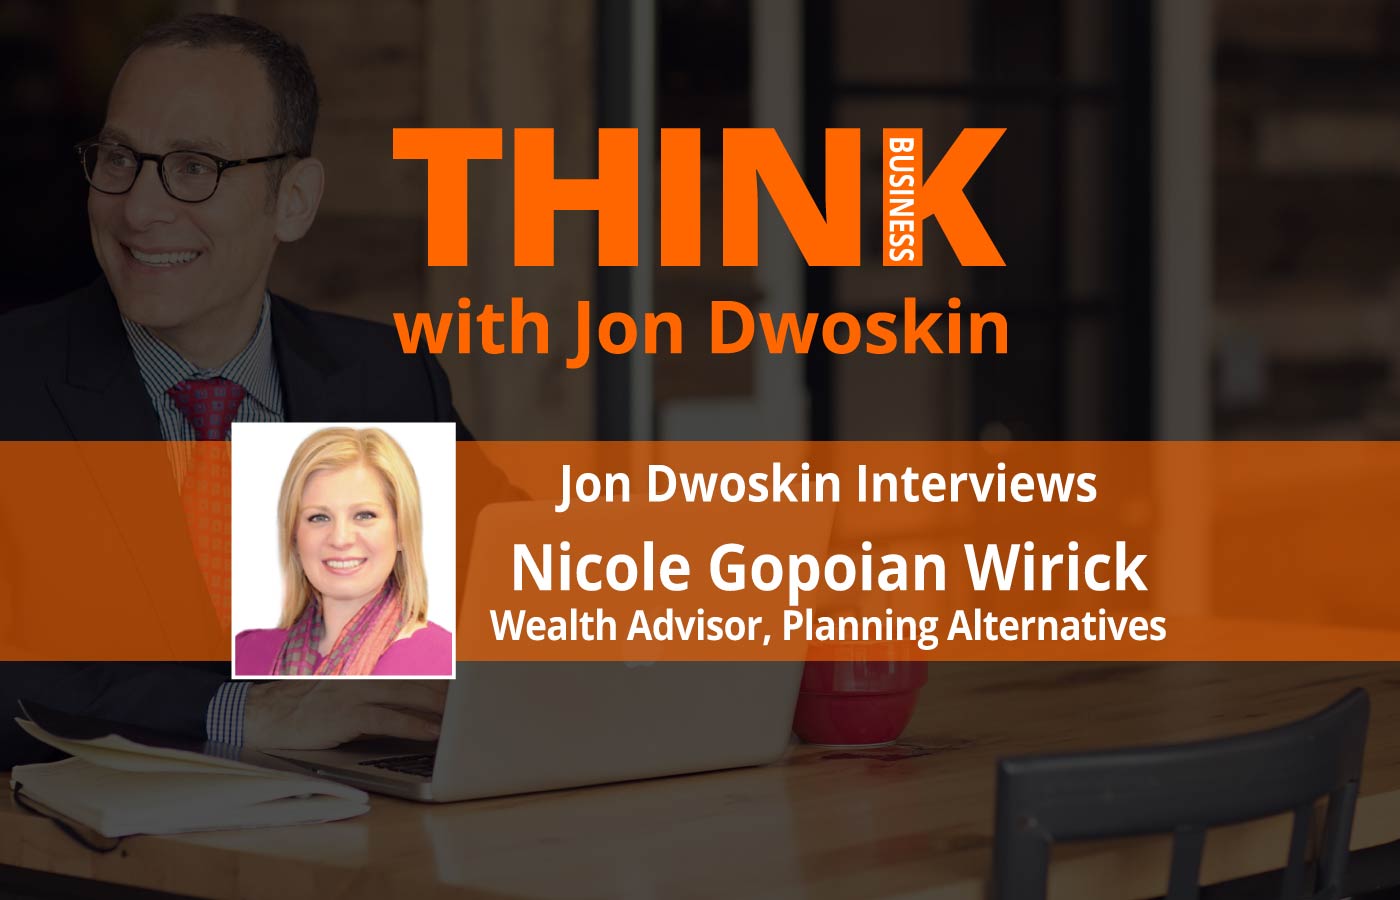 THINK Business: Jon Dwoskin Interviews Nicole Gopoian Wirick, Wealth Advisor, Planning Alternatives